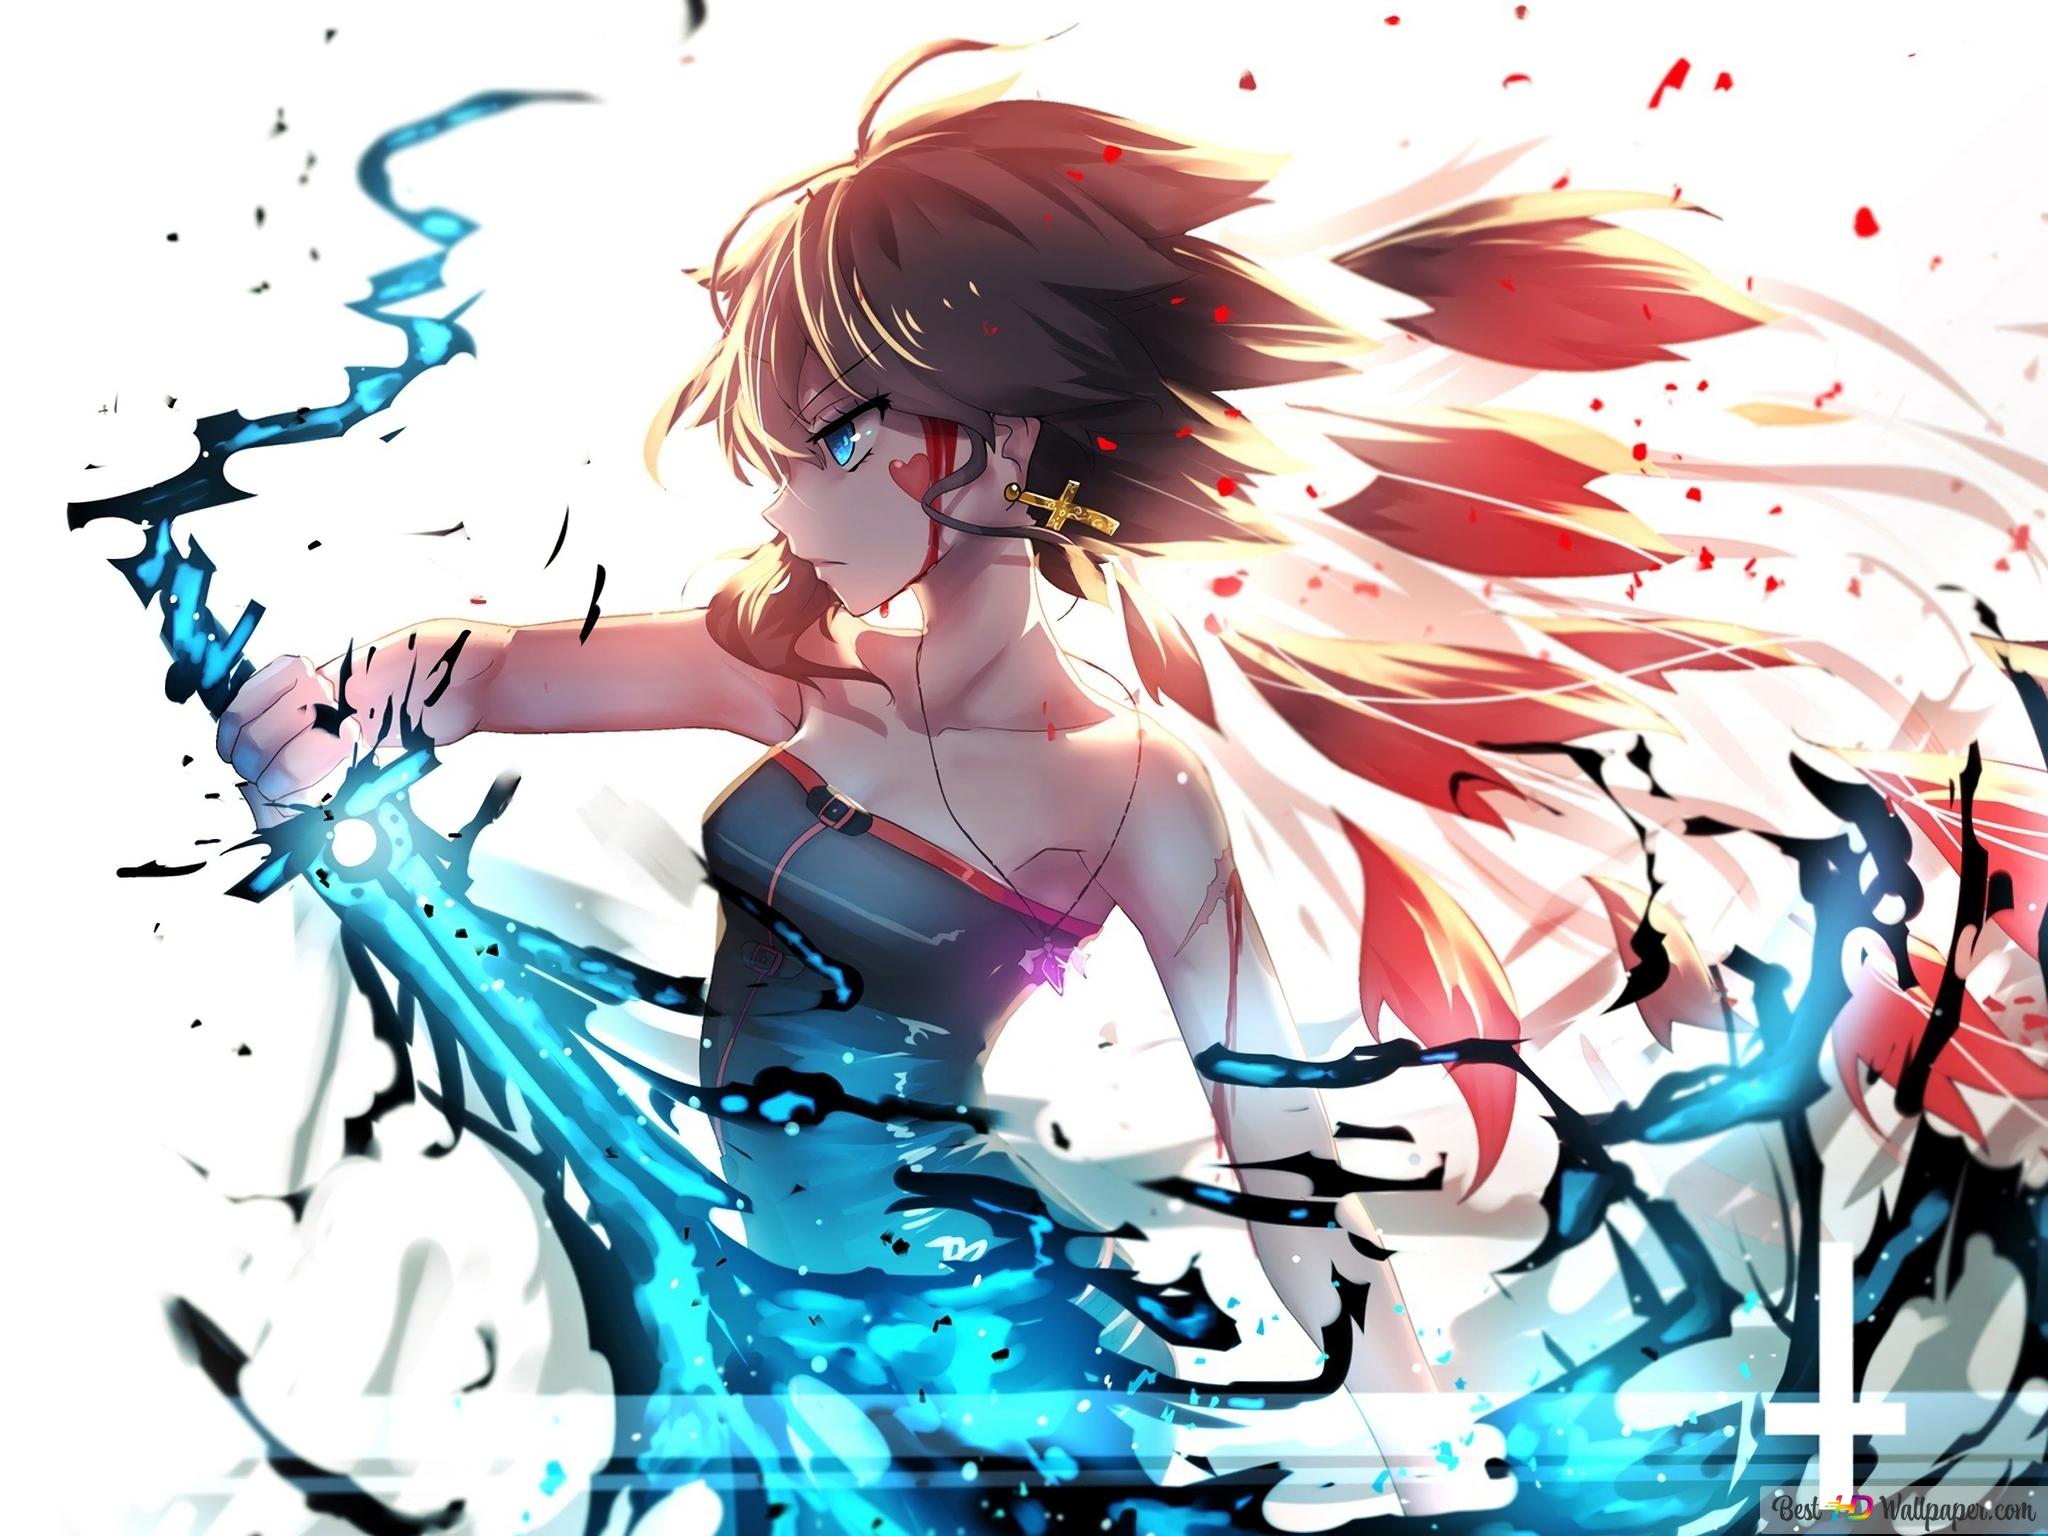 Pixiv Fantasia Anime Girl Flaming Sword 4K wallpaper download